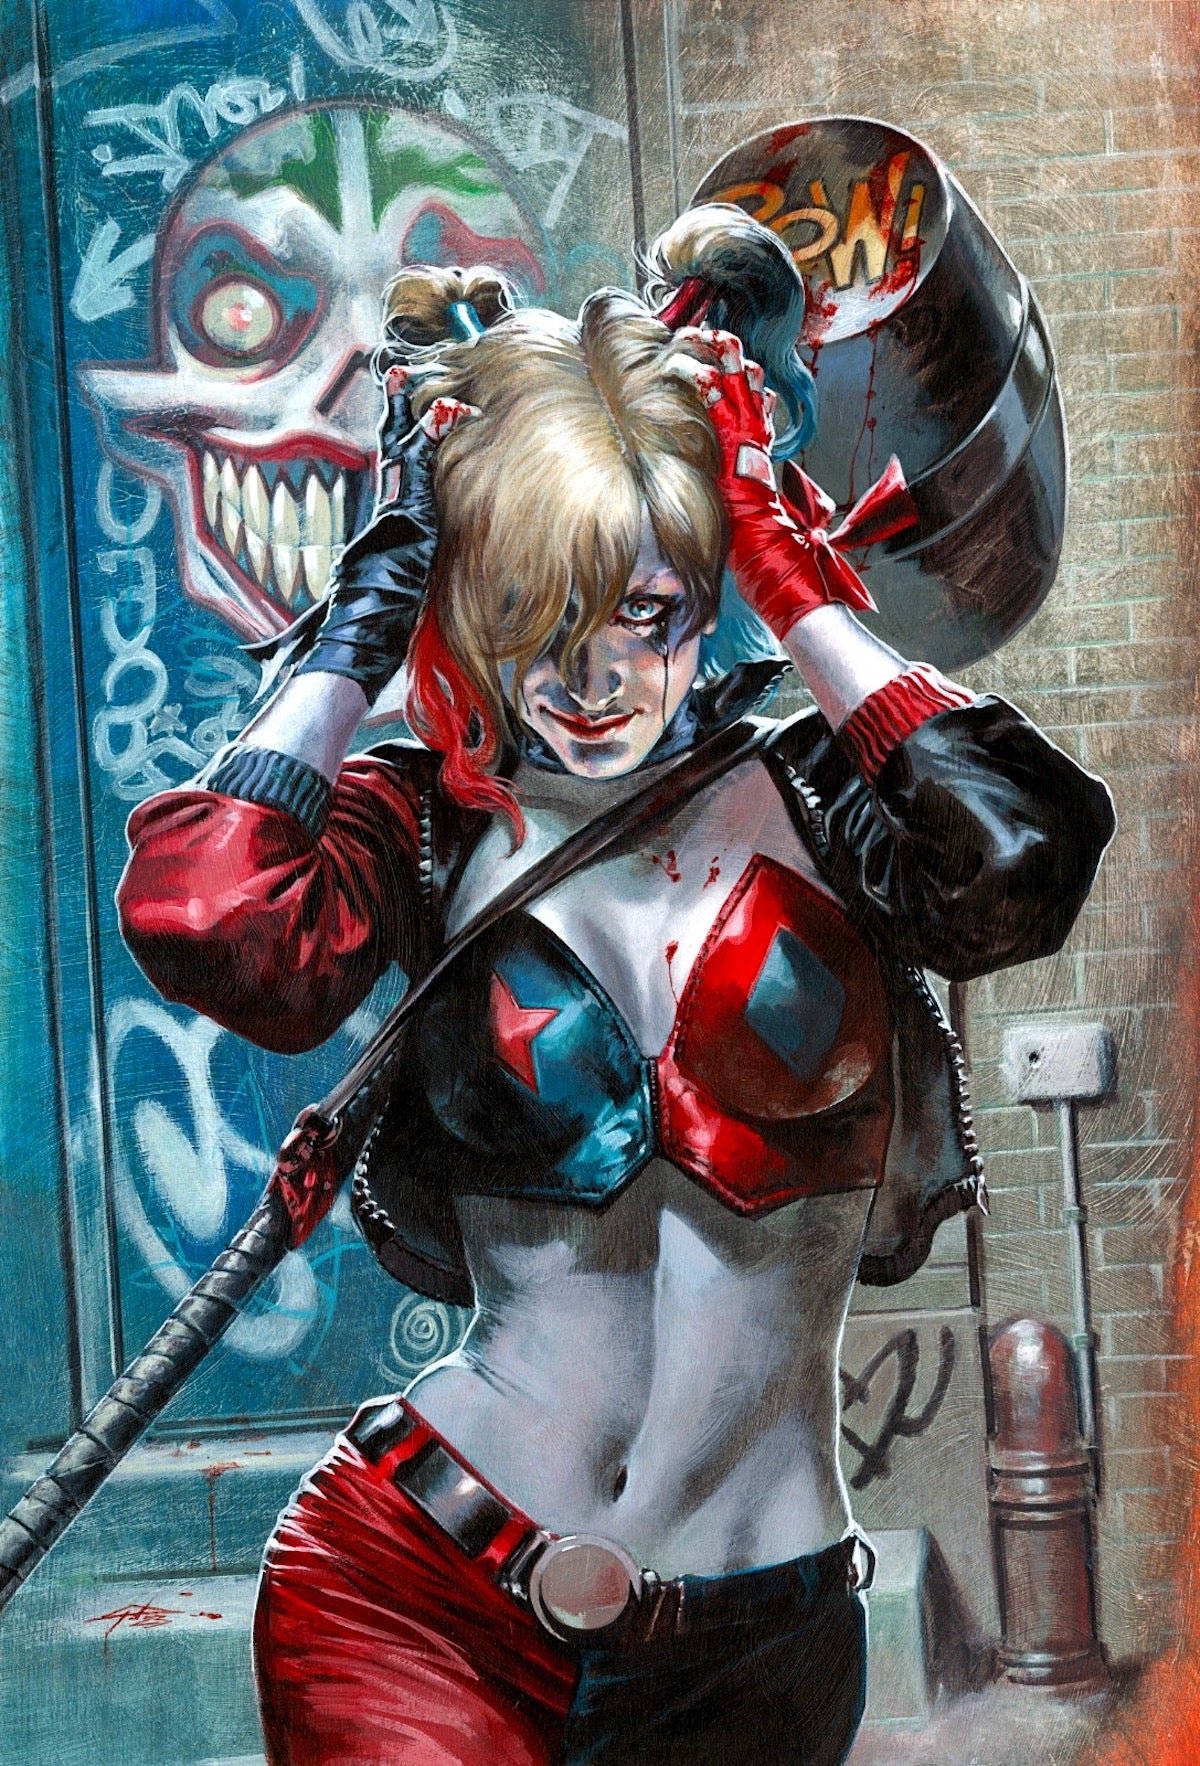 Harley Quinn by Gabrielle Dell'Otto